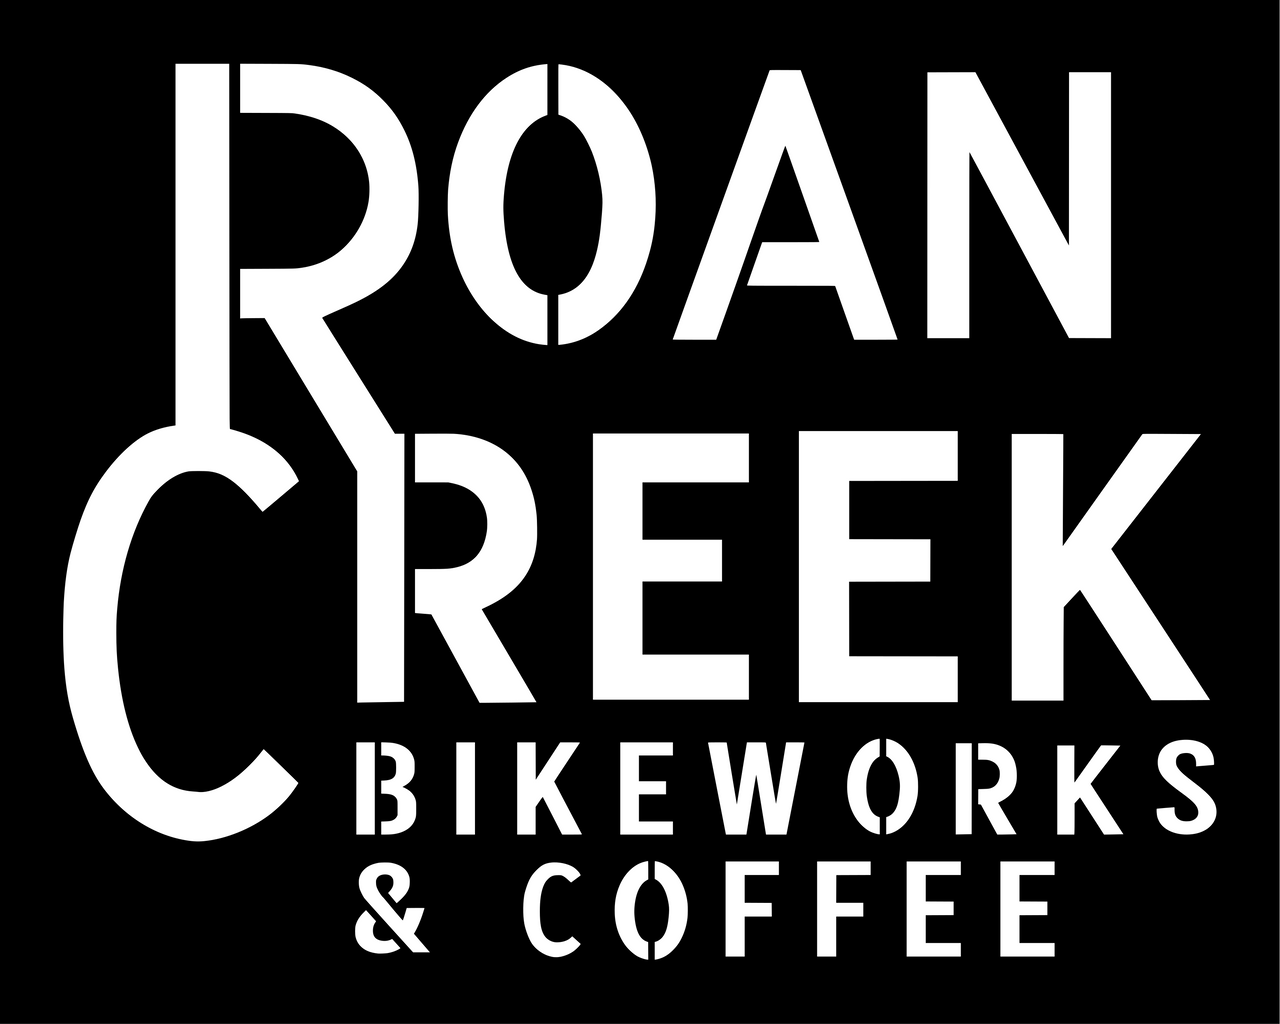 Custom Listing for Roan Creek Bikeworks